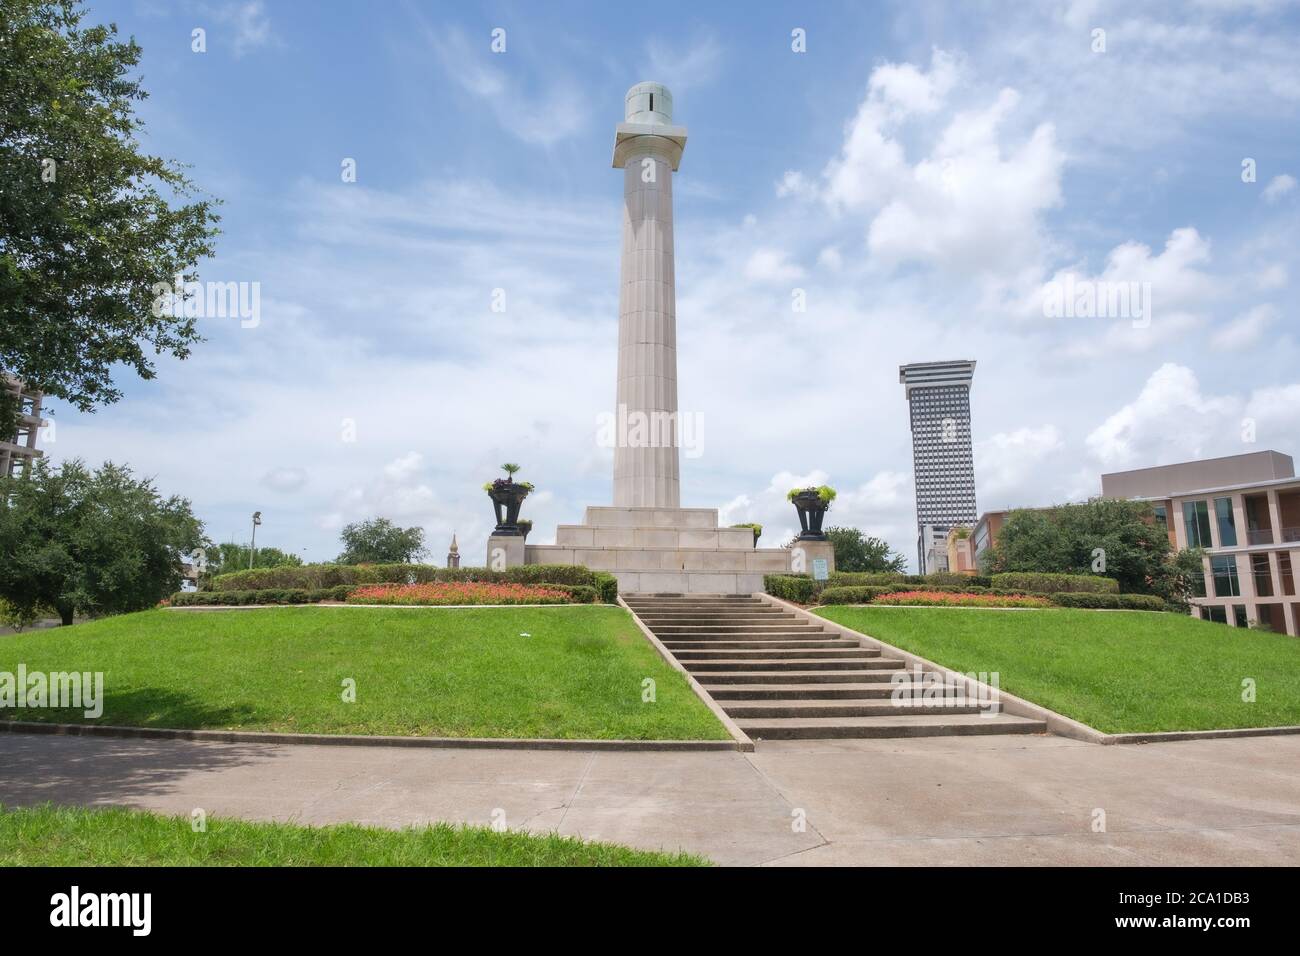 New Orleans, Louisiana/USA - 8/1/2020: Pedestal vacío una vez ocupado por la estatua de Robert E. Lee Foto de stock